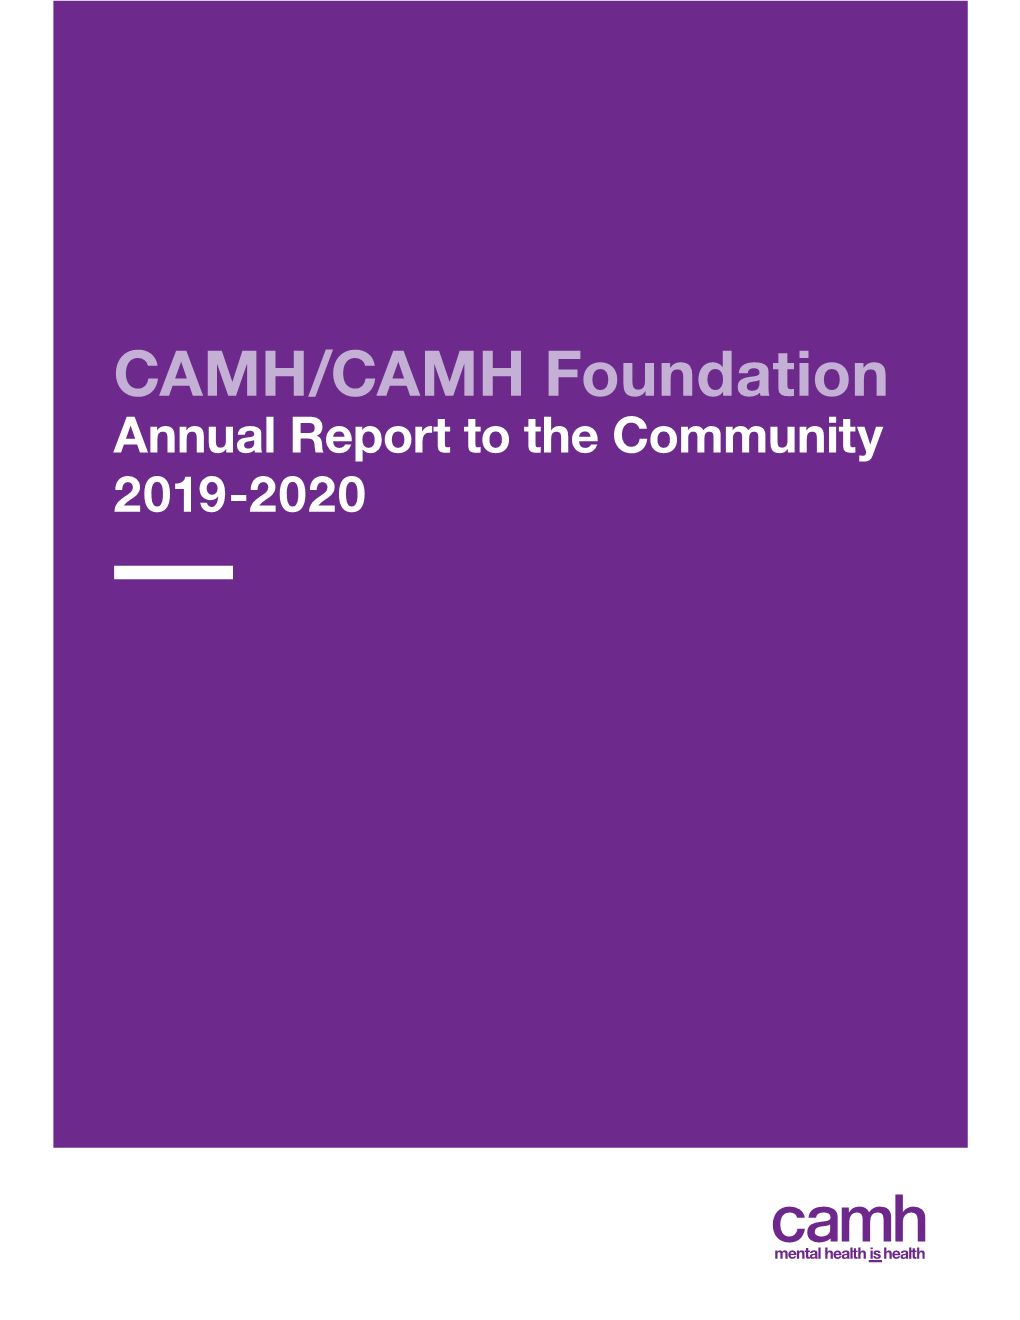 CAMH/CAMH Foundation Annual Report 2019-2020